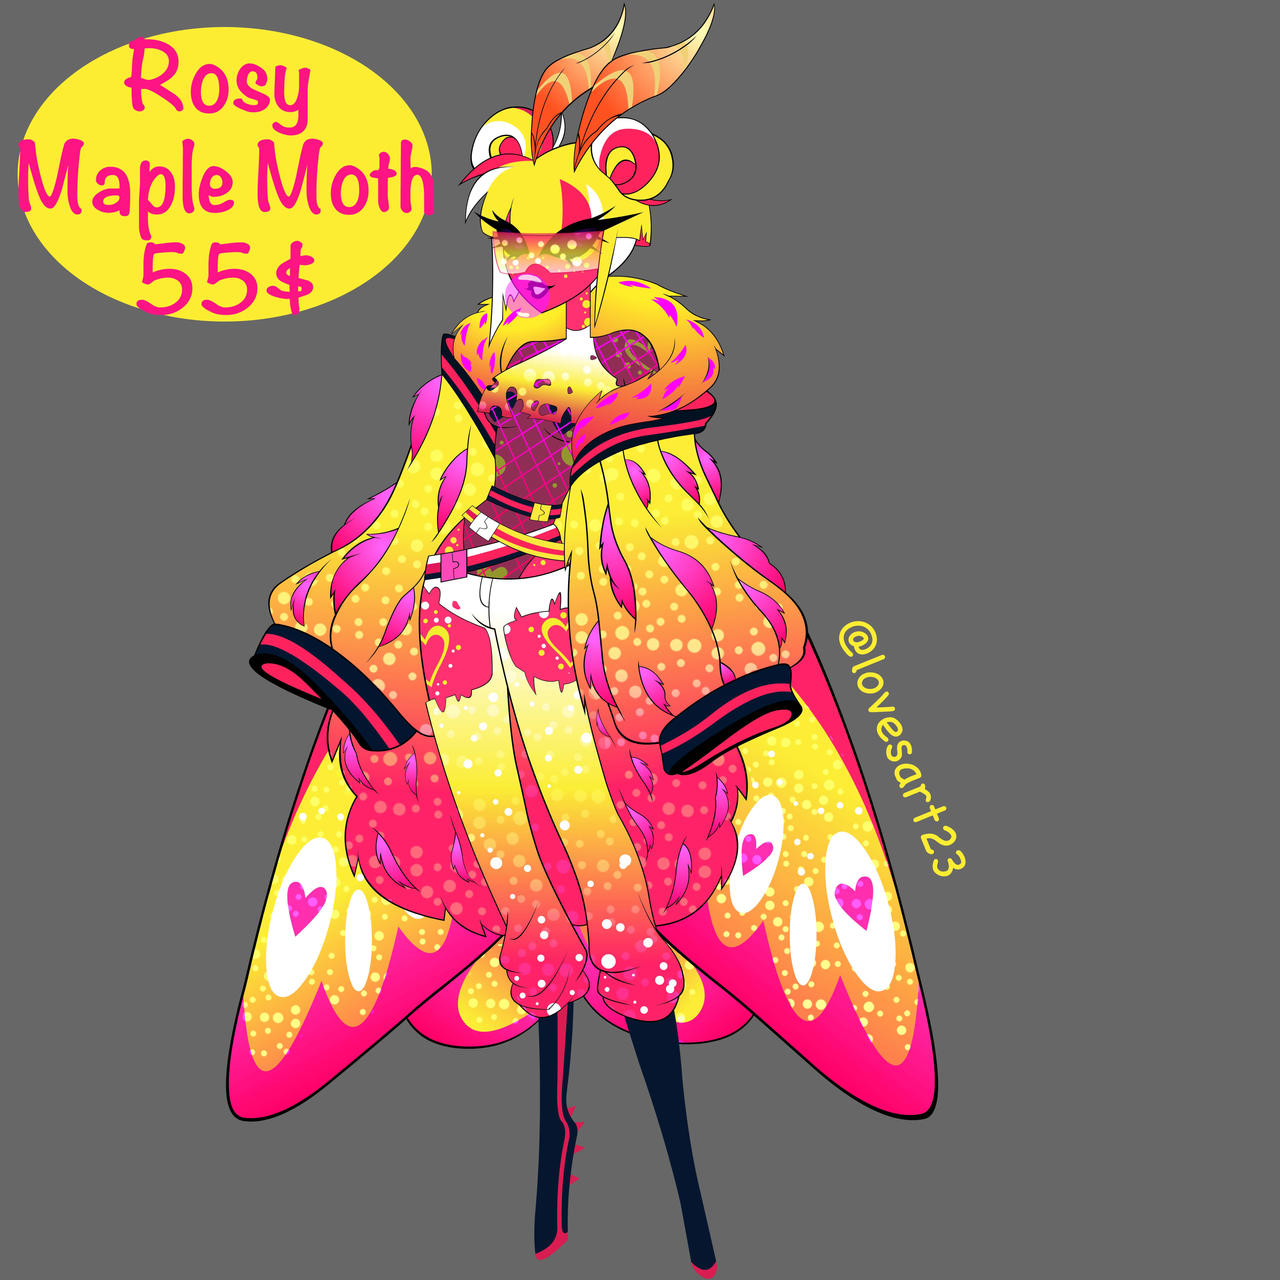 Rosy Maple Moth by wreckingball34 on DeviantArt